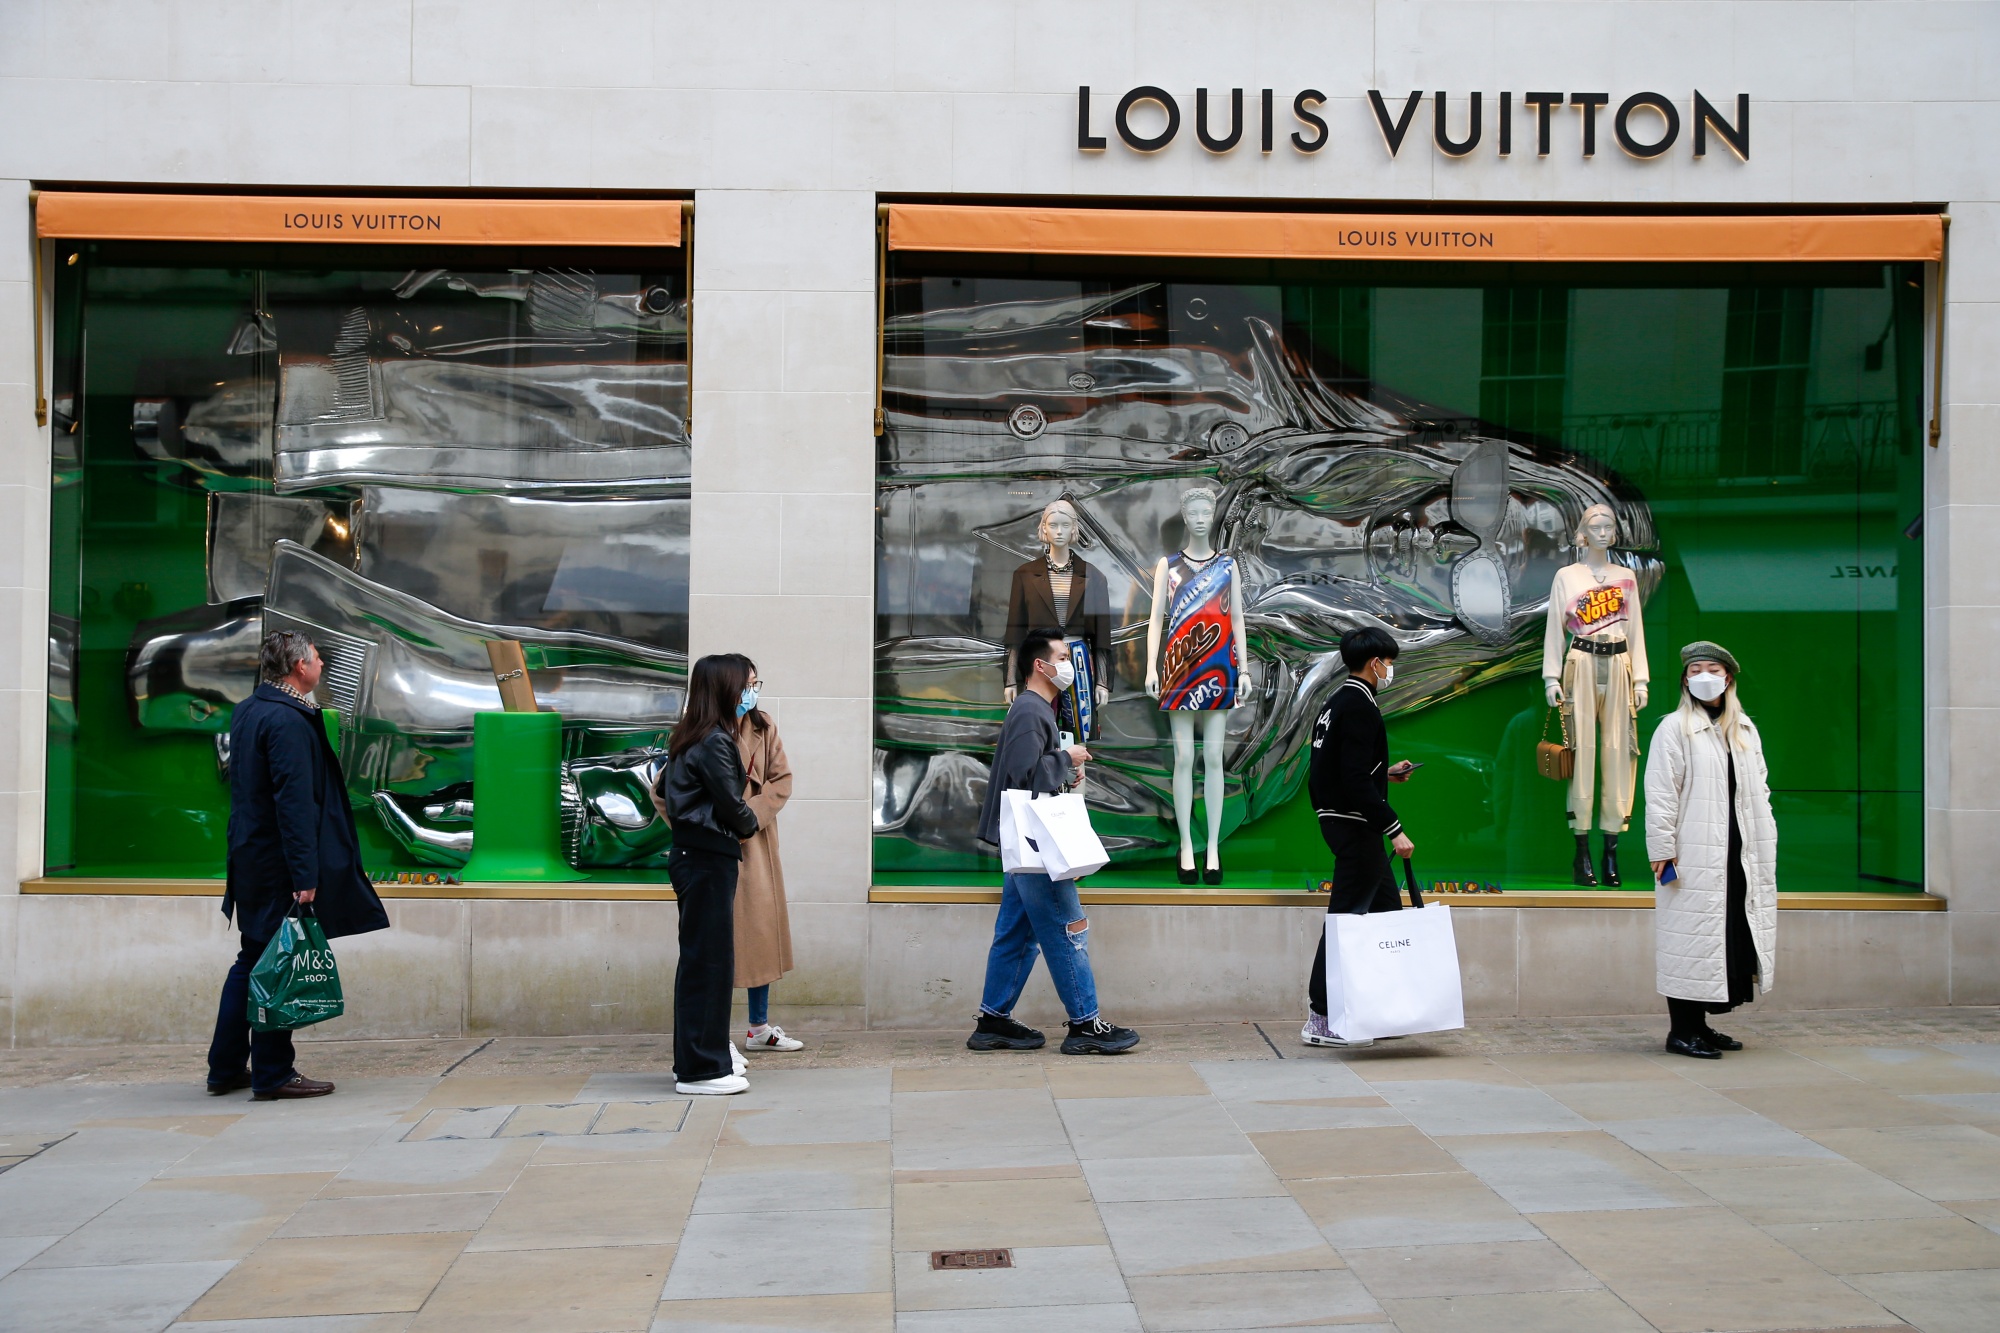 Buy Louis Vuitton Checkbook Online In India -  India